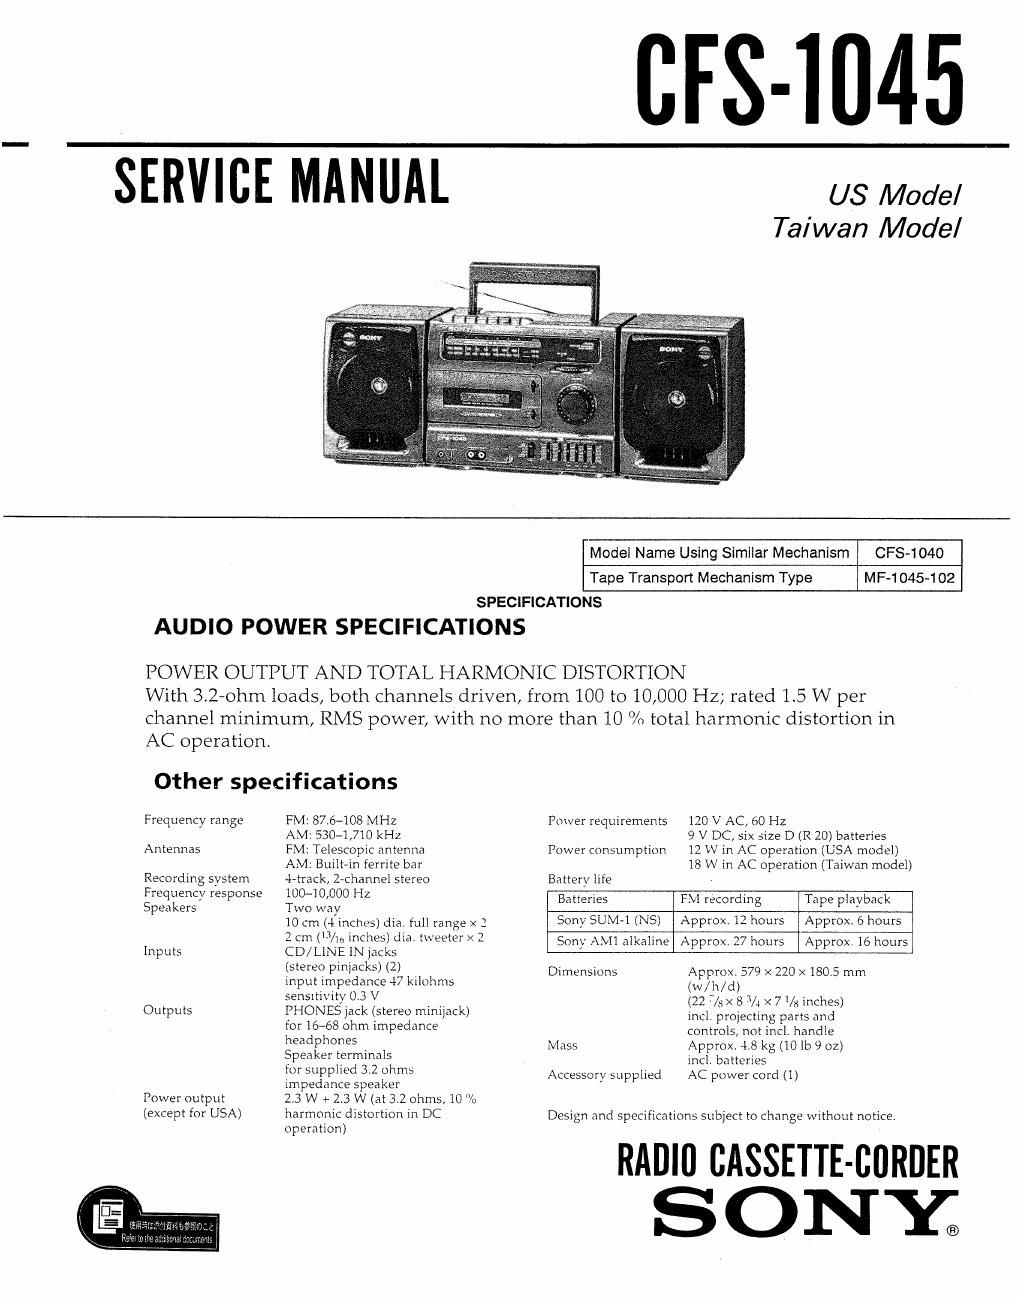 sony cfs 1045 service manual